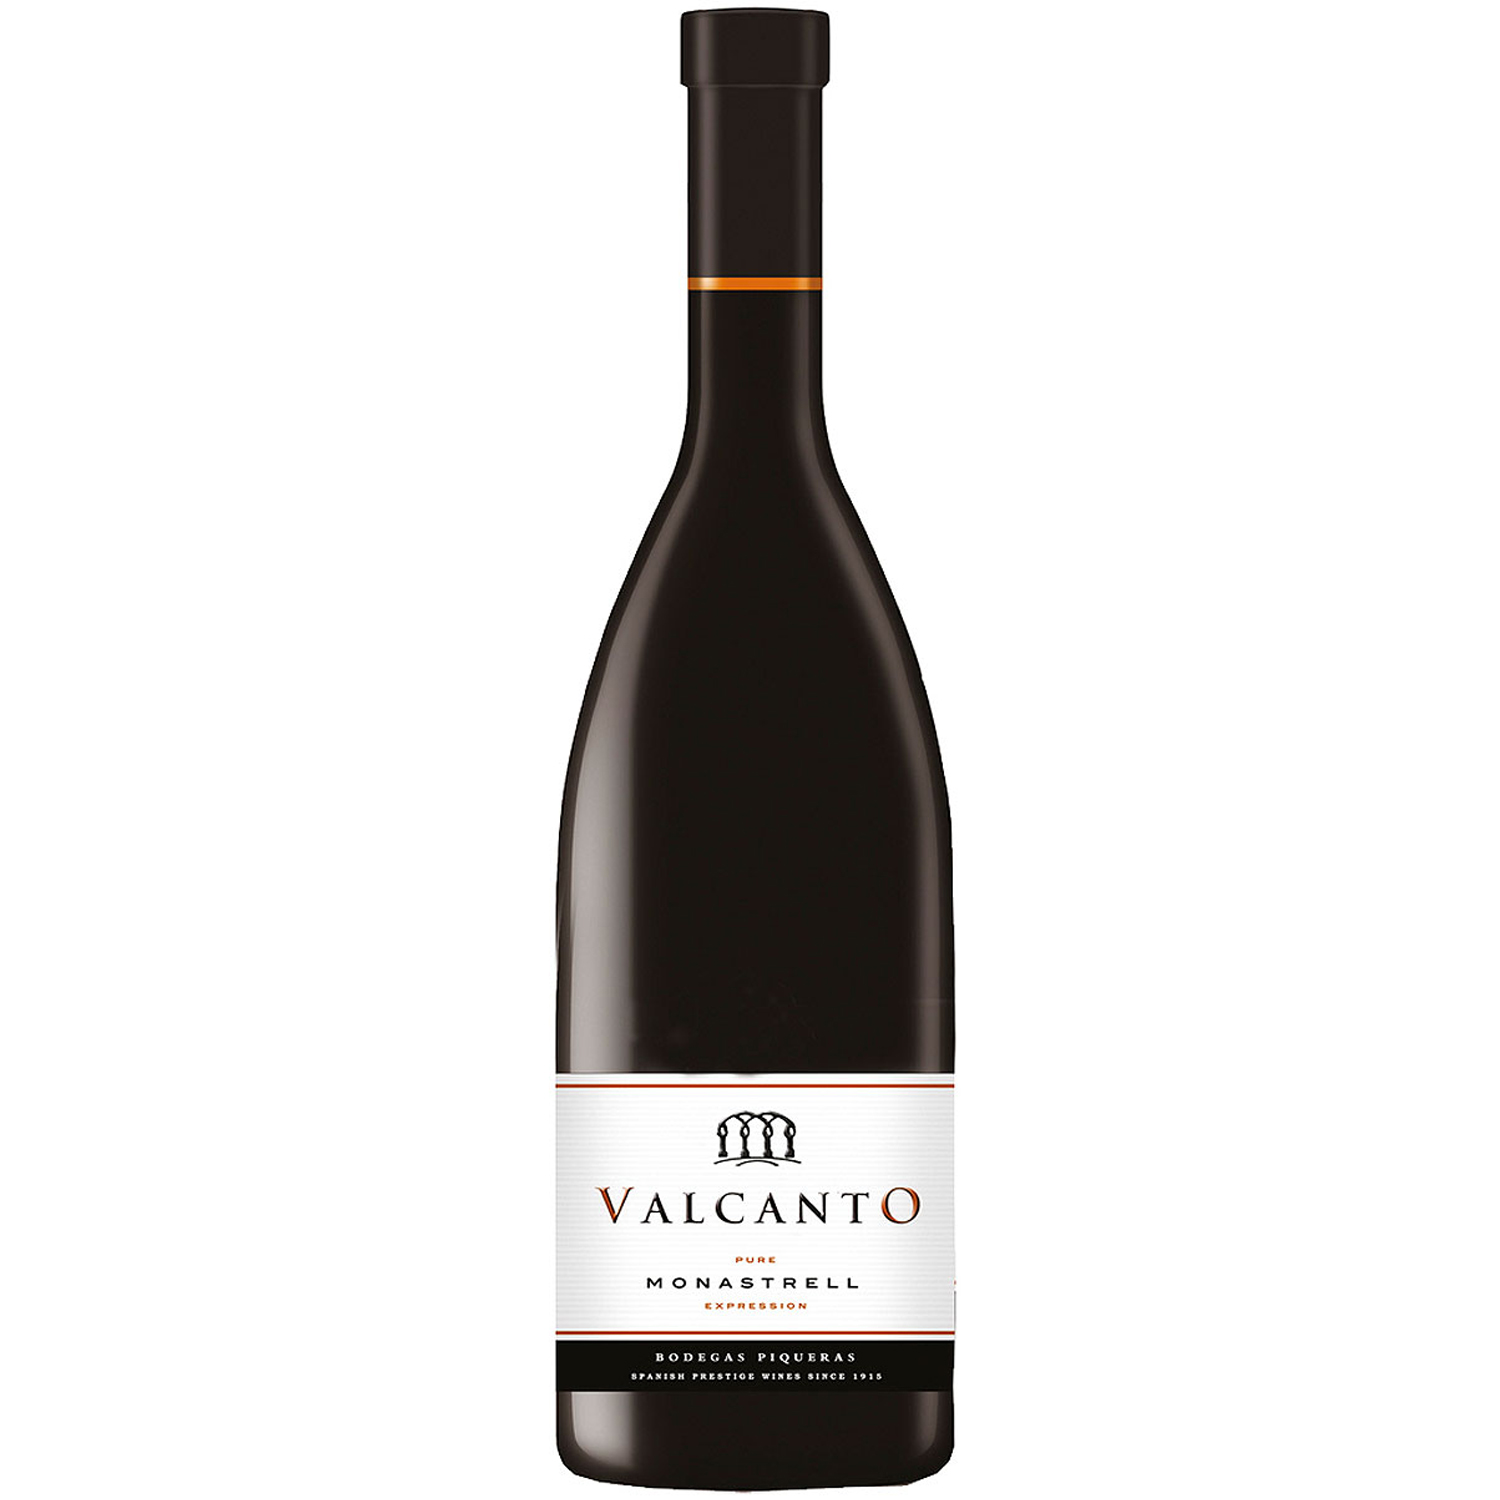 Spanischer Rotwein Valcanto Monastrell 2015